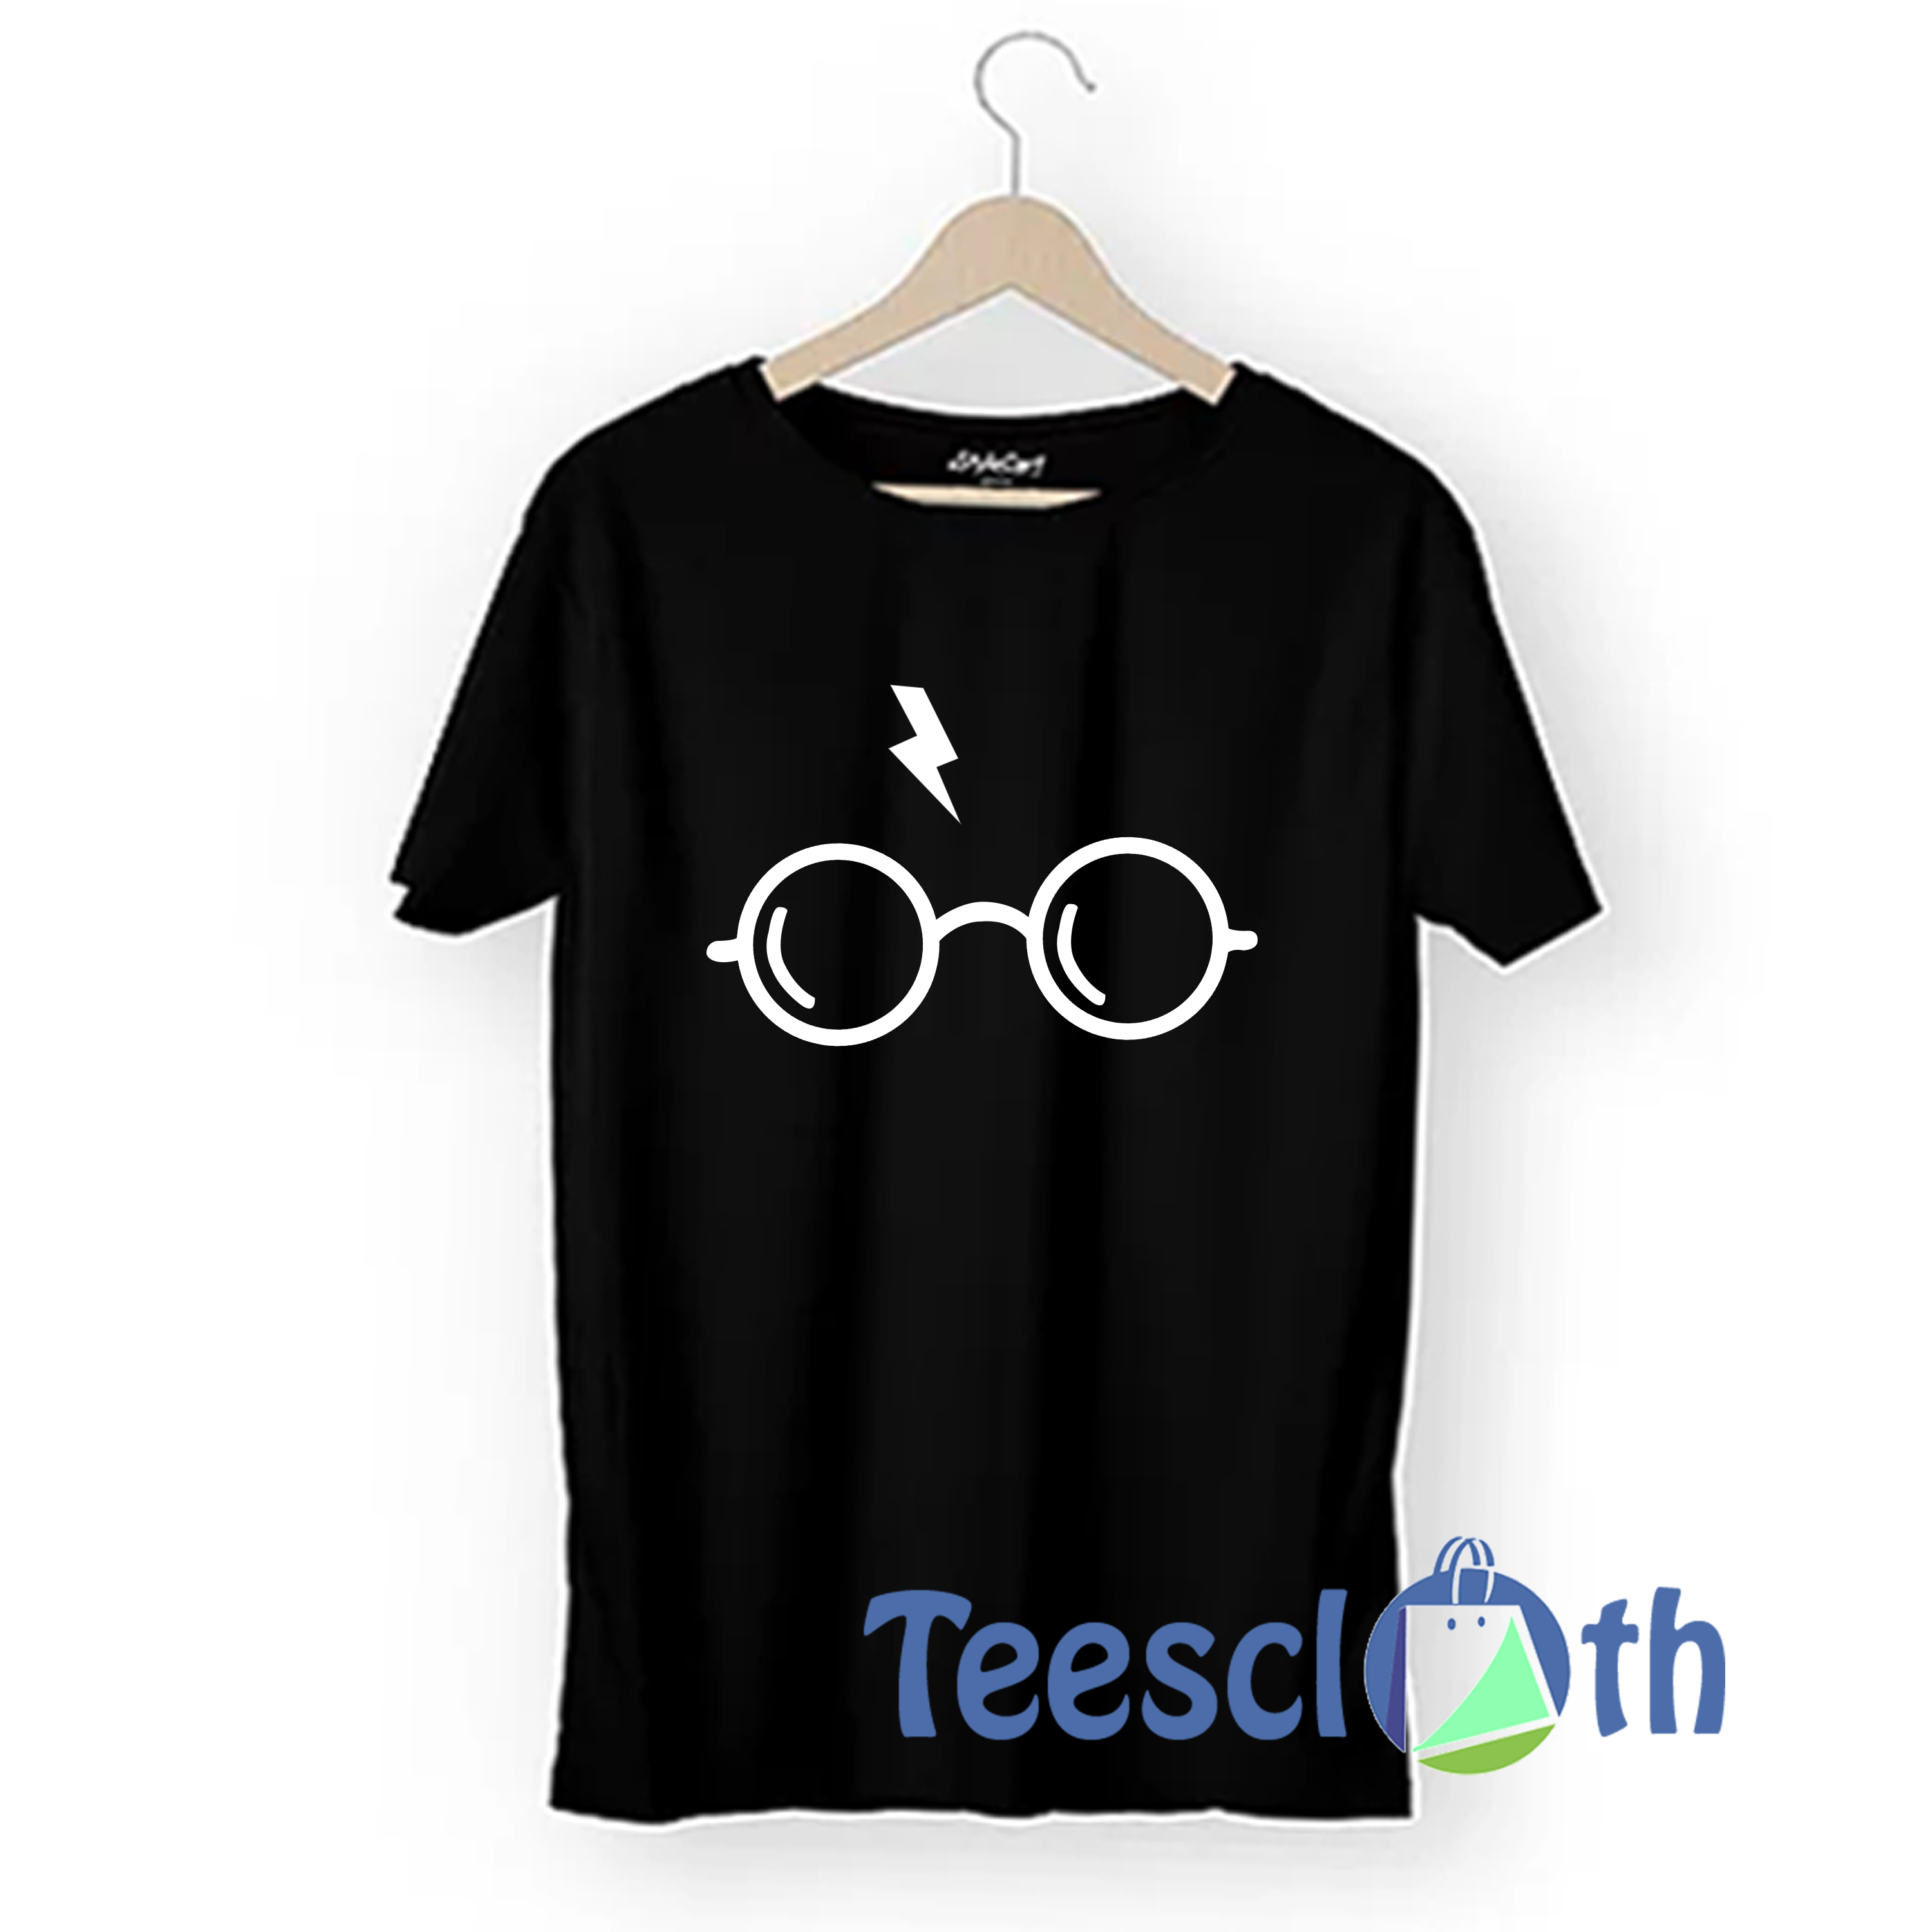 Reactor Aanpassen Begunstigde Harry Potter T Shirt For Men Women And Youth